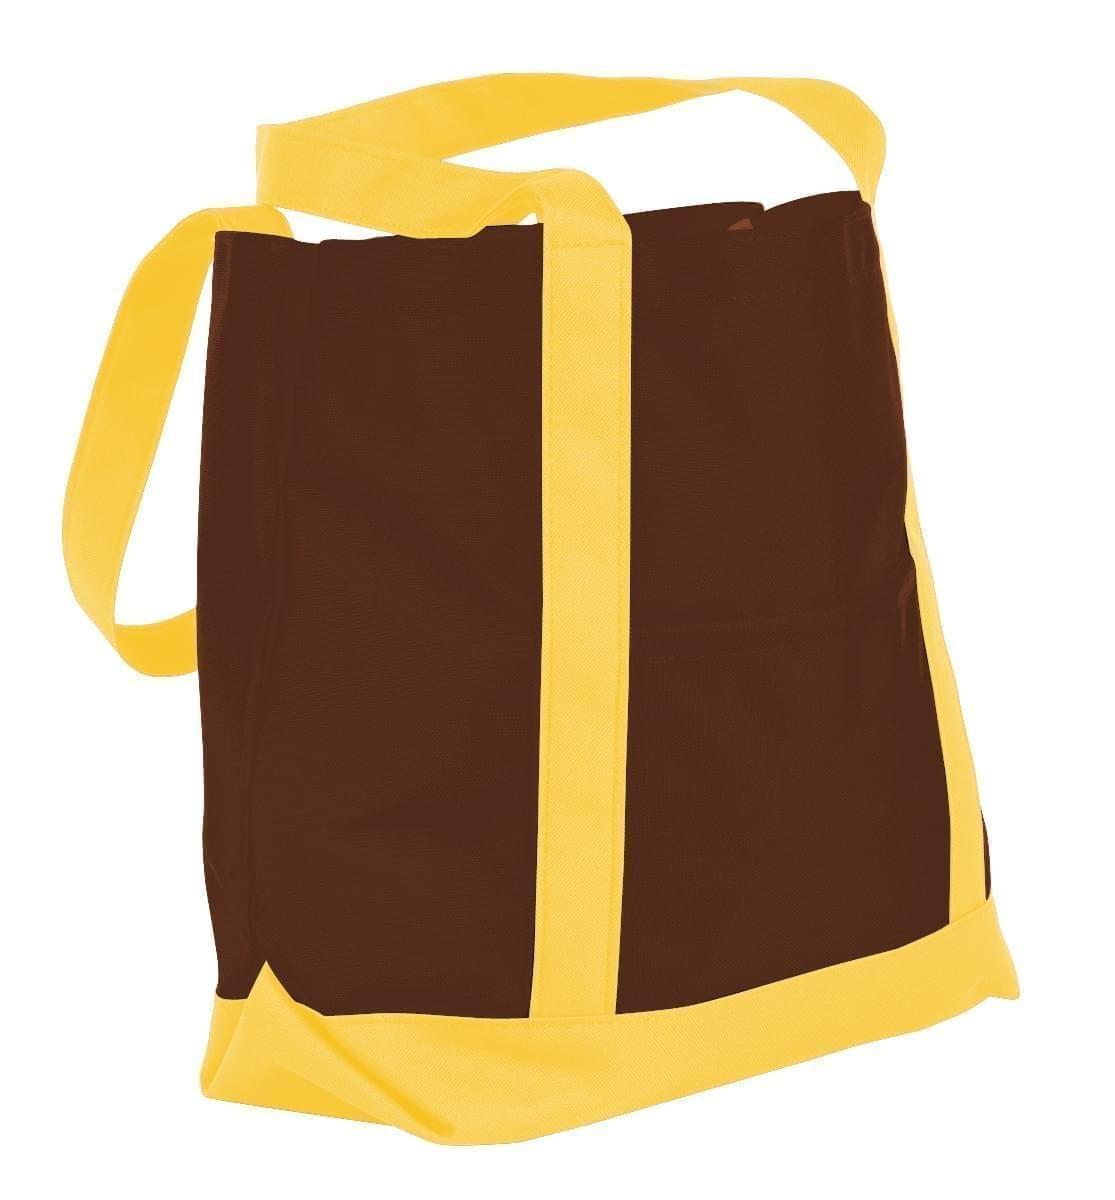 USA Made Canvas Fashion Tote Bags, Brown-Gold, XAACL1UAAQ